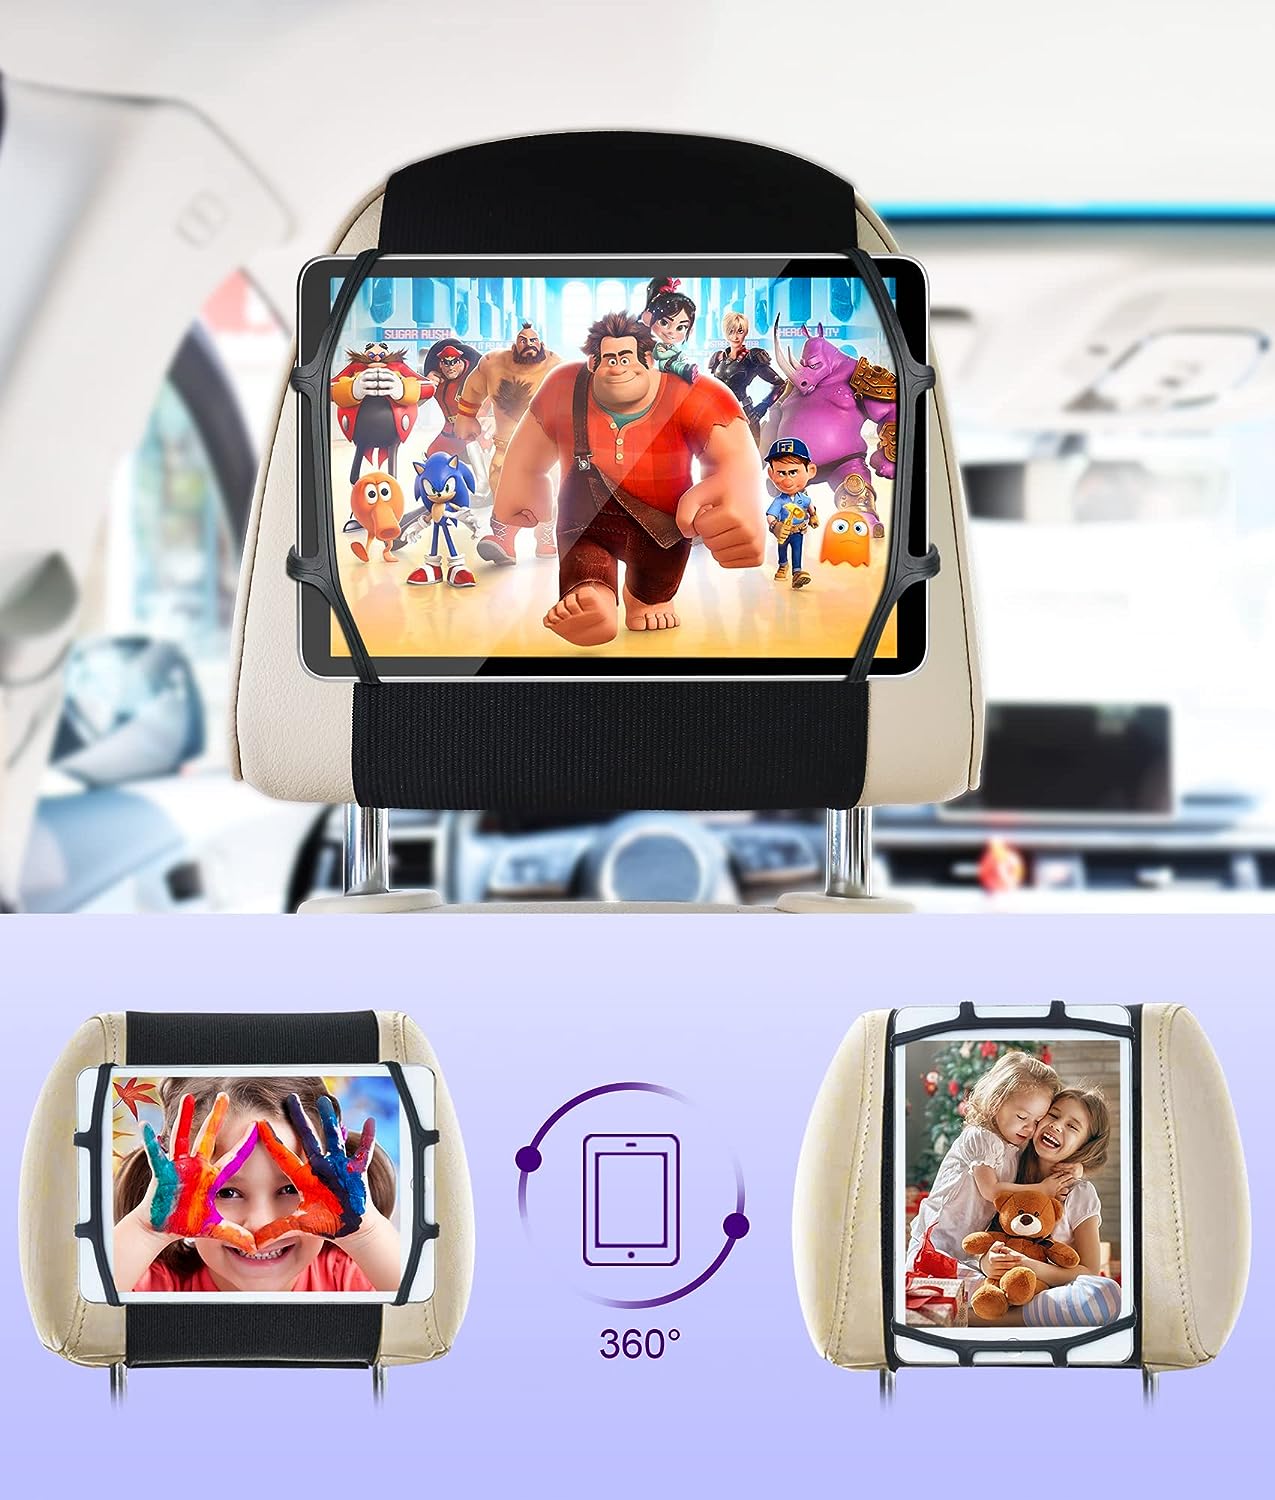 Lpoake Car Headrest Tablet Holder Review